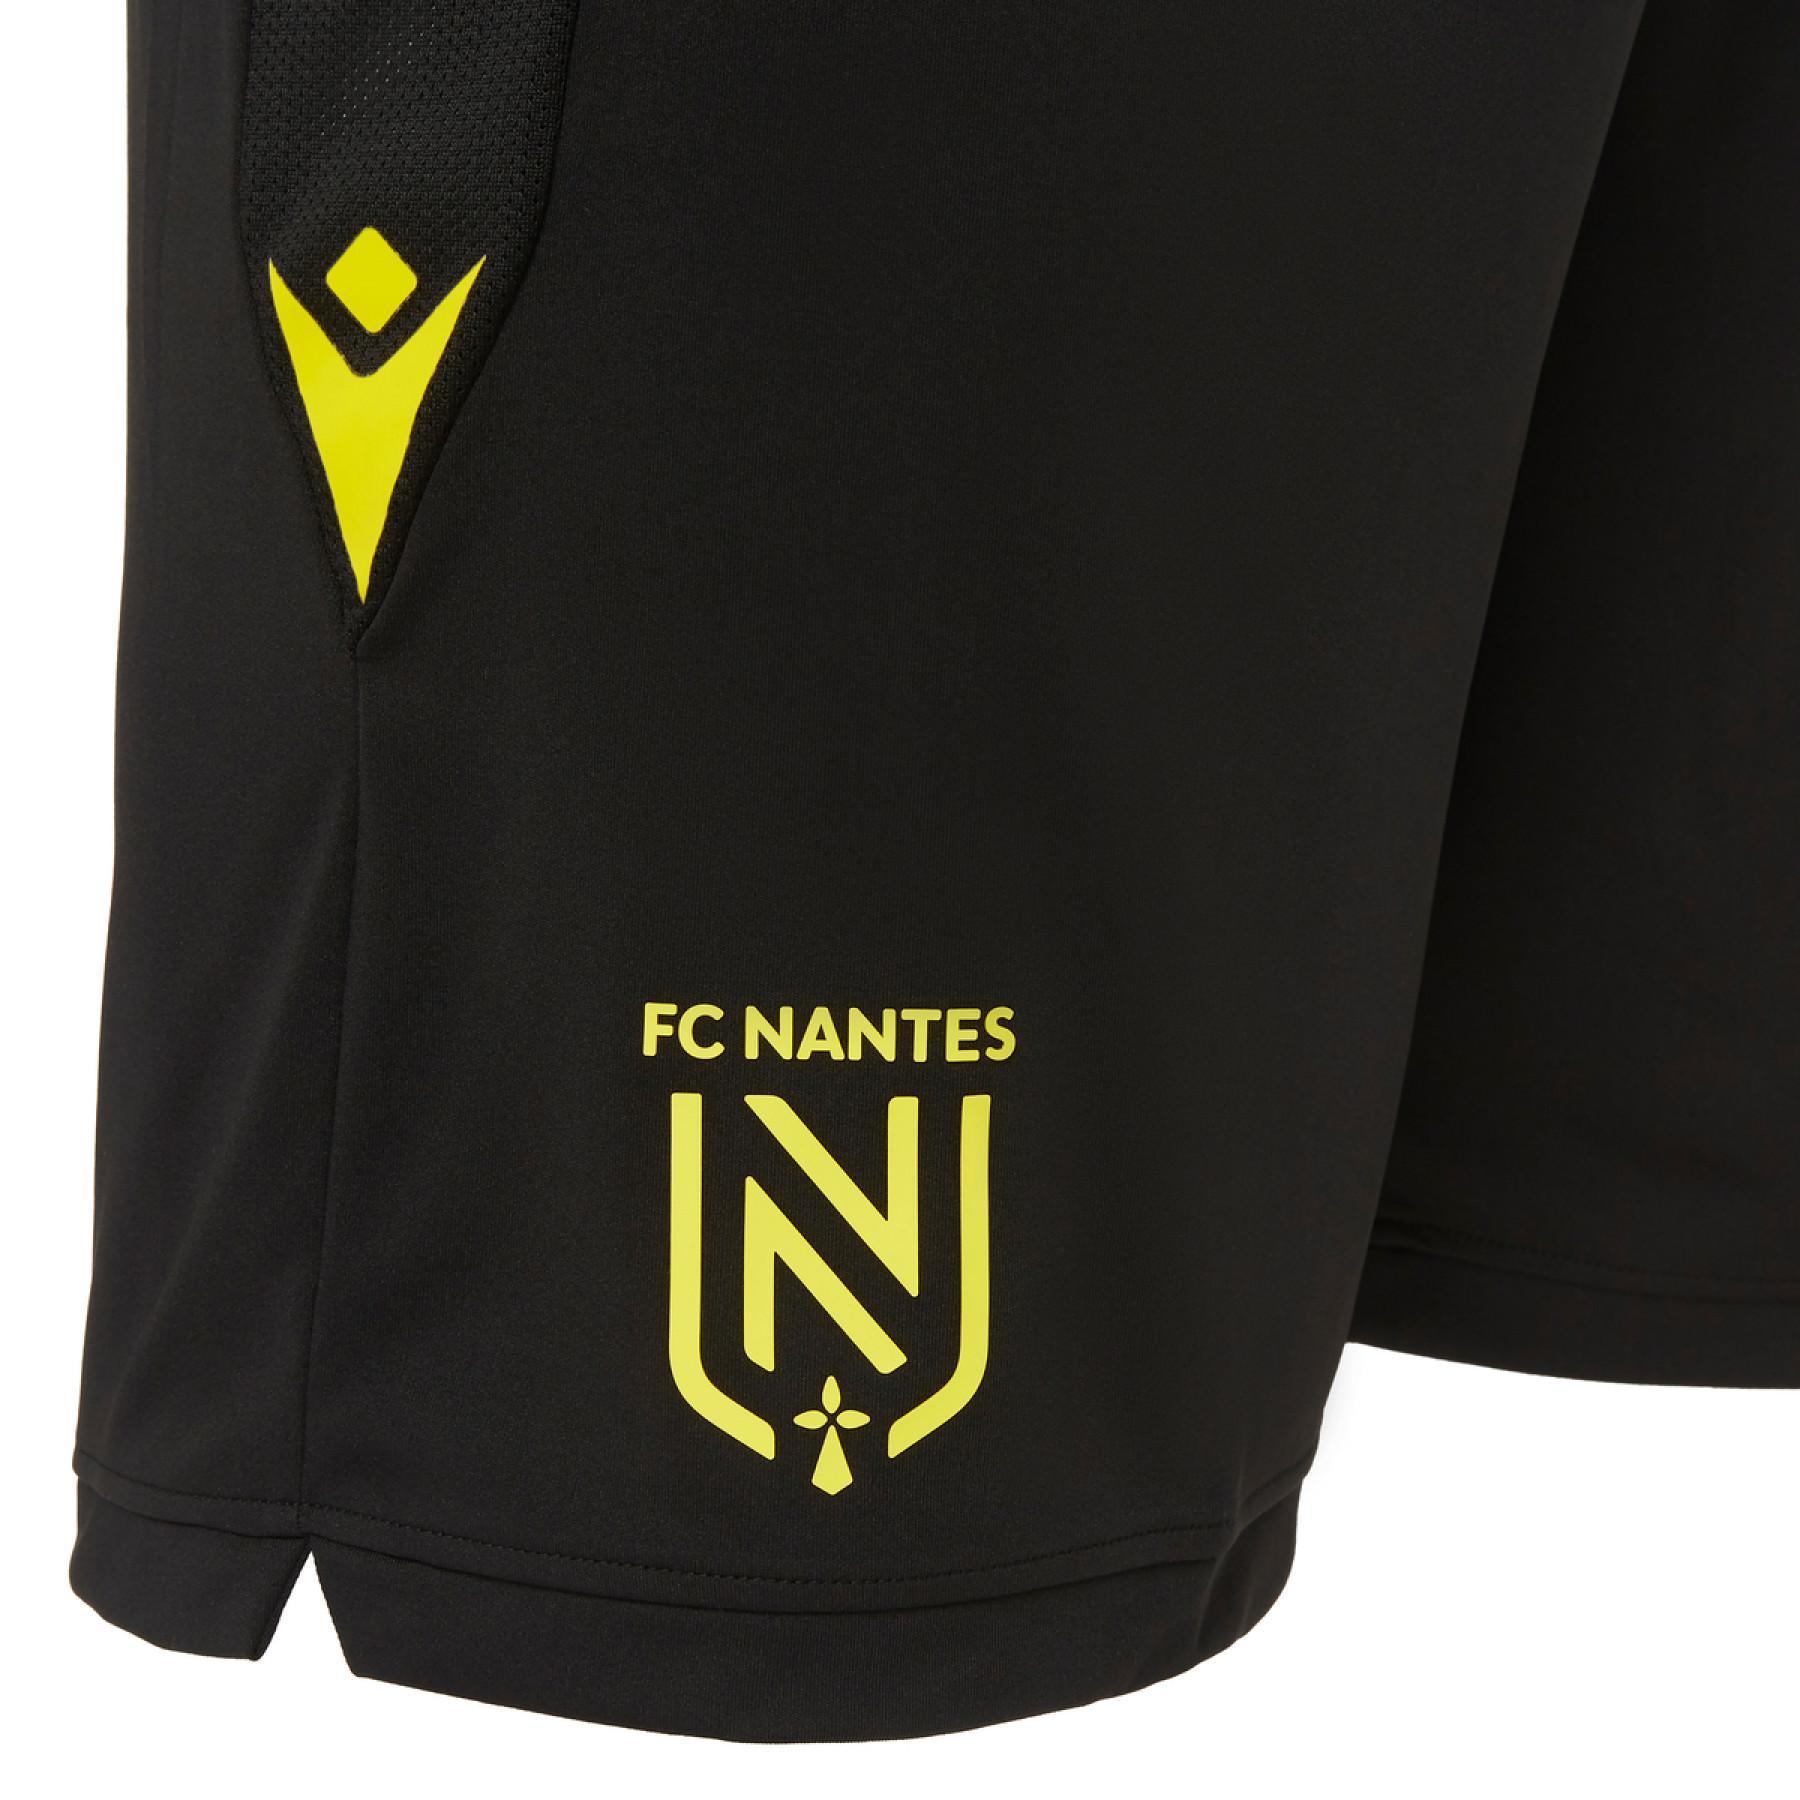 Pantalones cortos para exteriores FC Nantes 2020/21